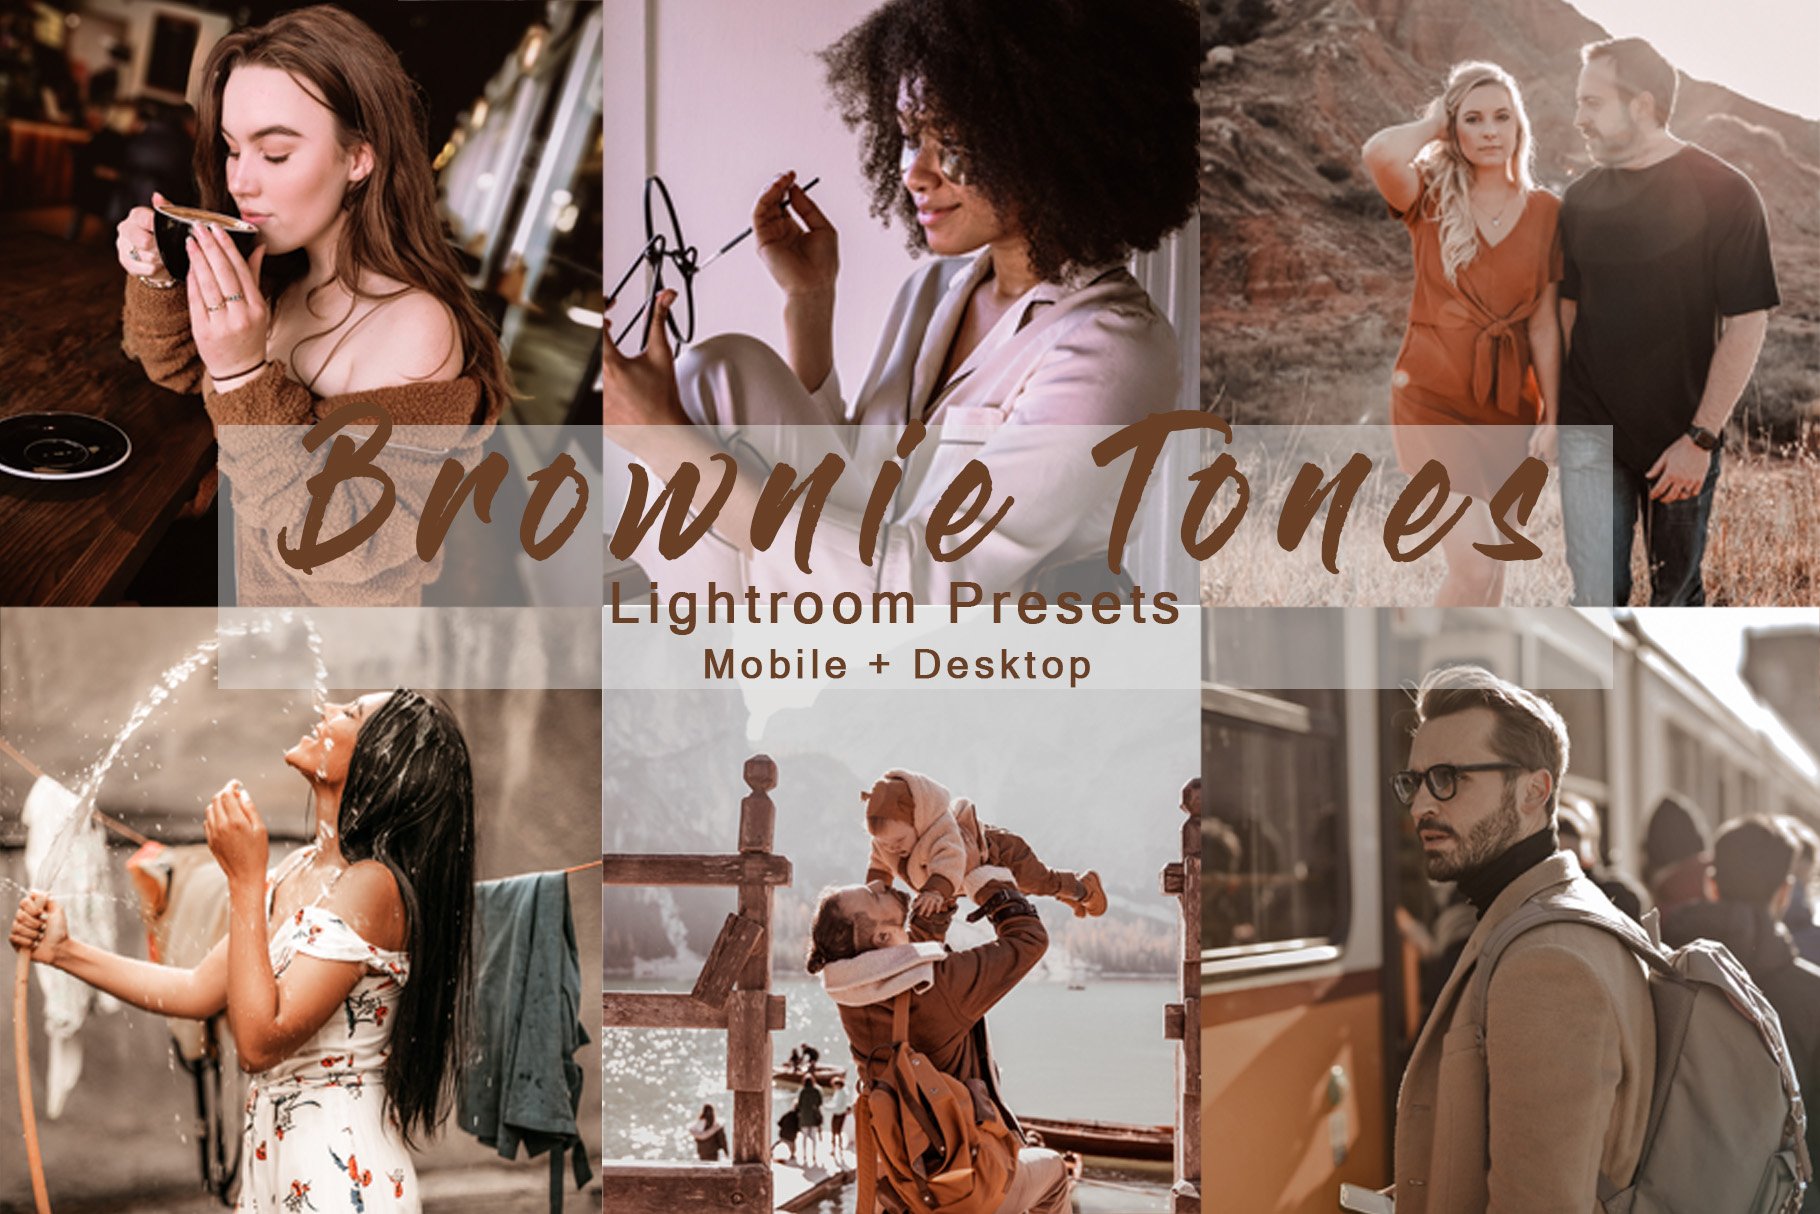 Brownie Tones | Lightroom Presetscover image.